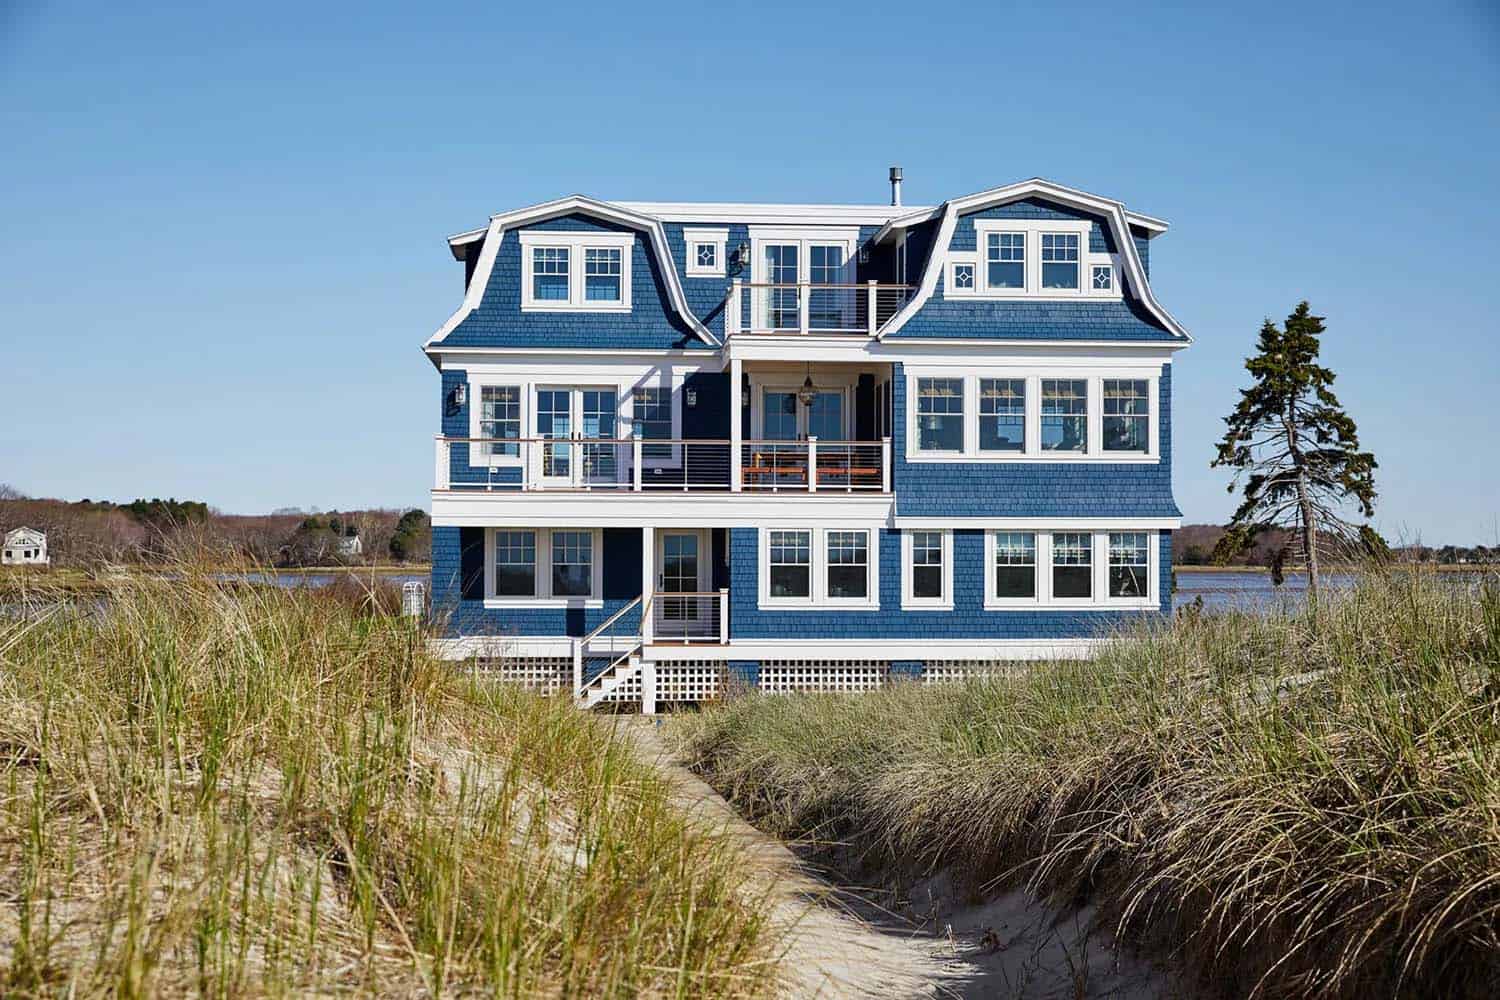 Step into a stunning beach cottage amidst the coastal Maine sand dunes